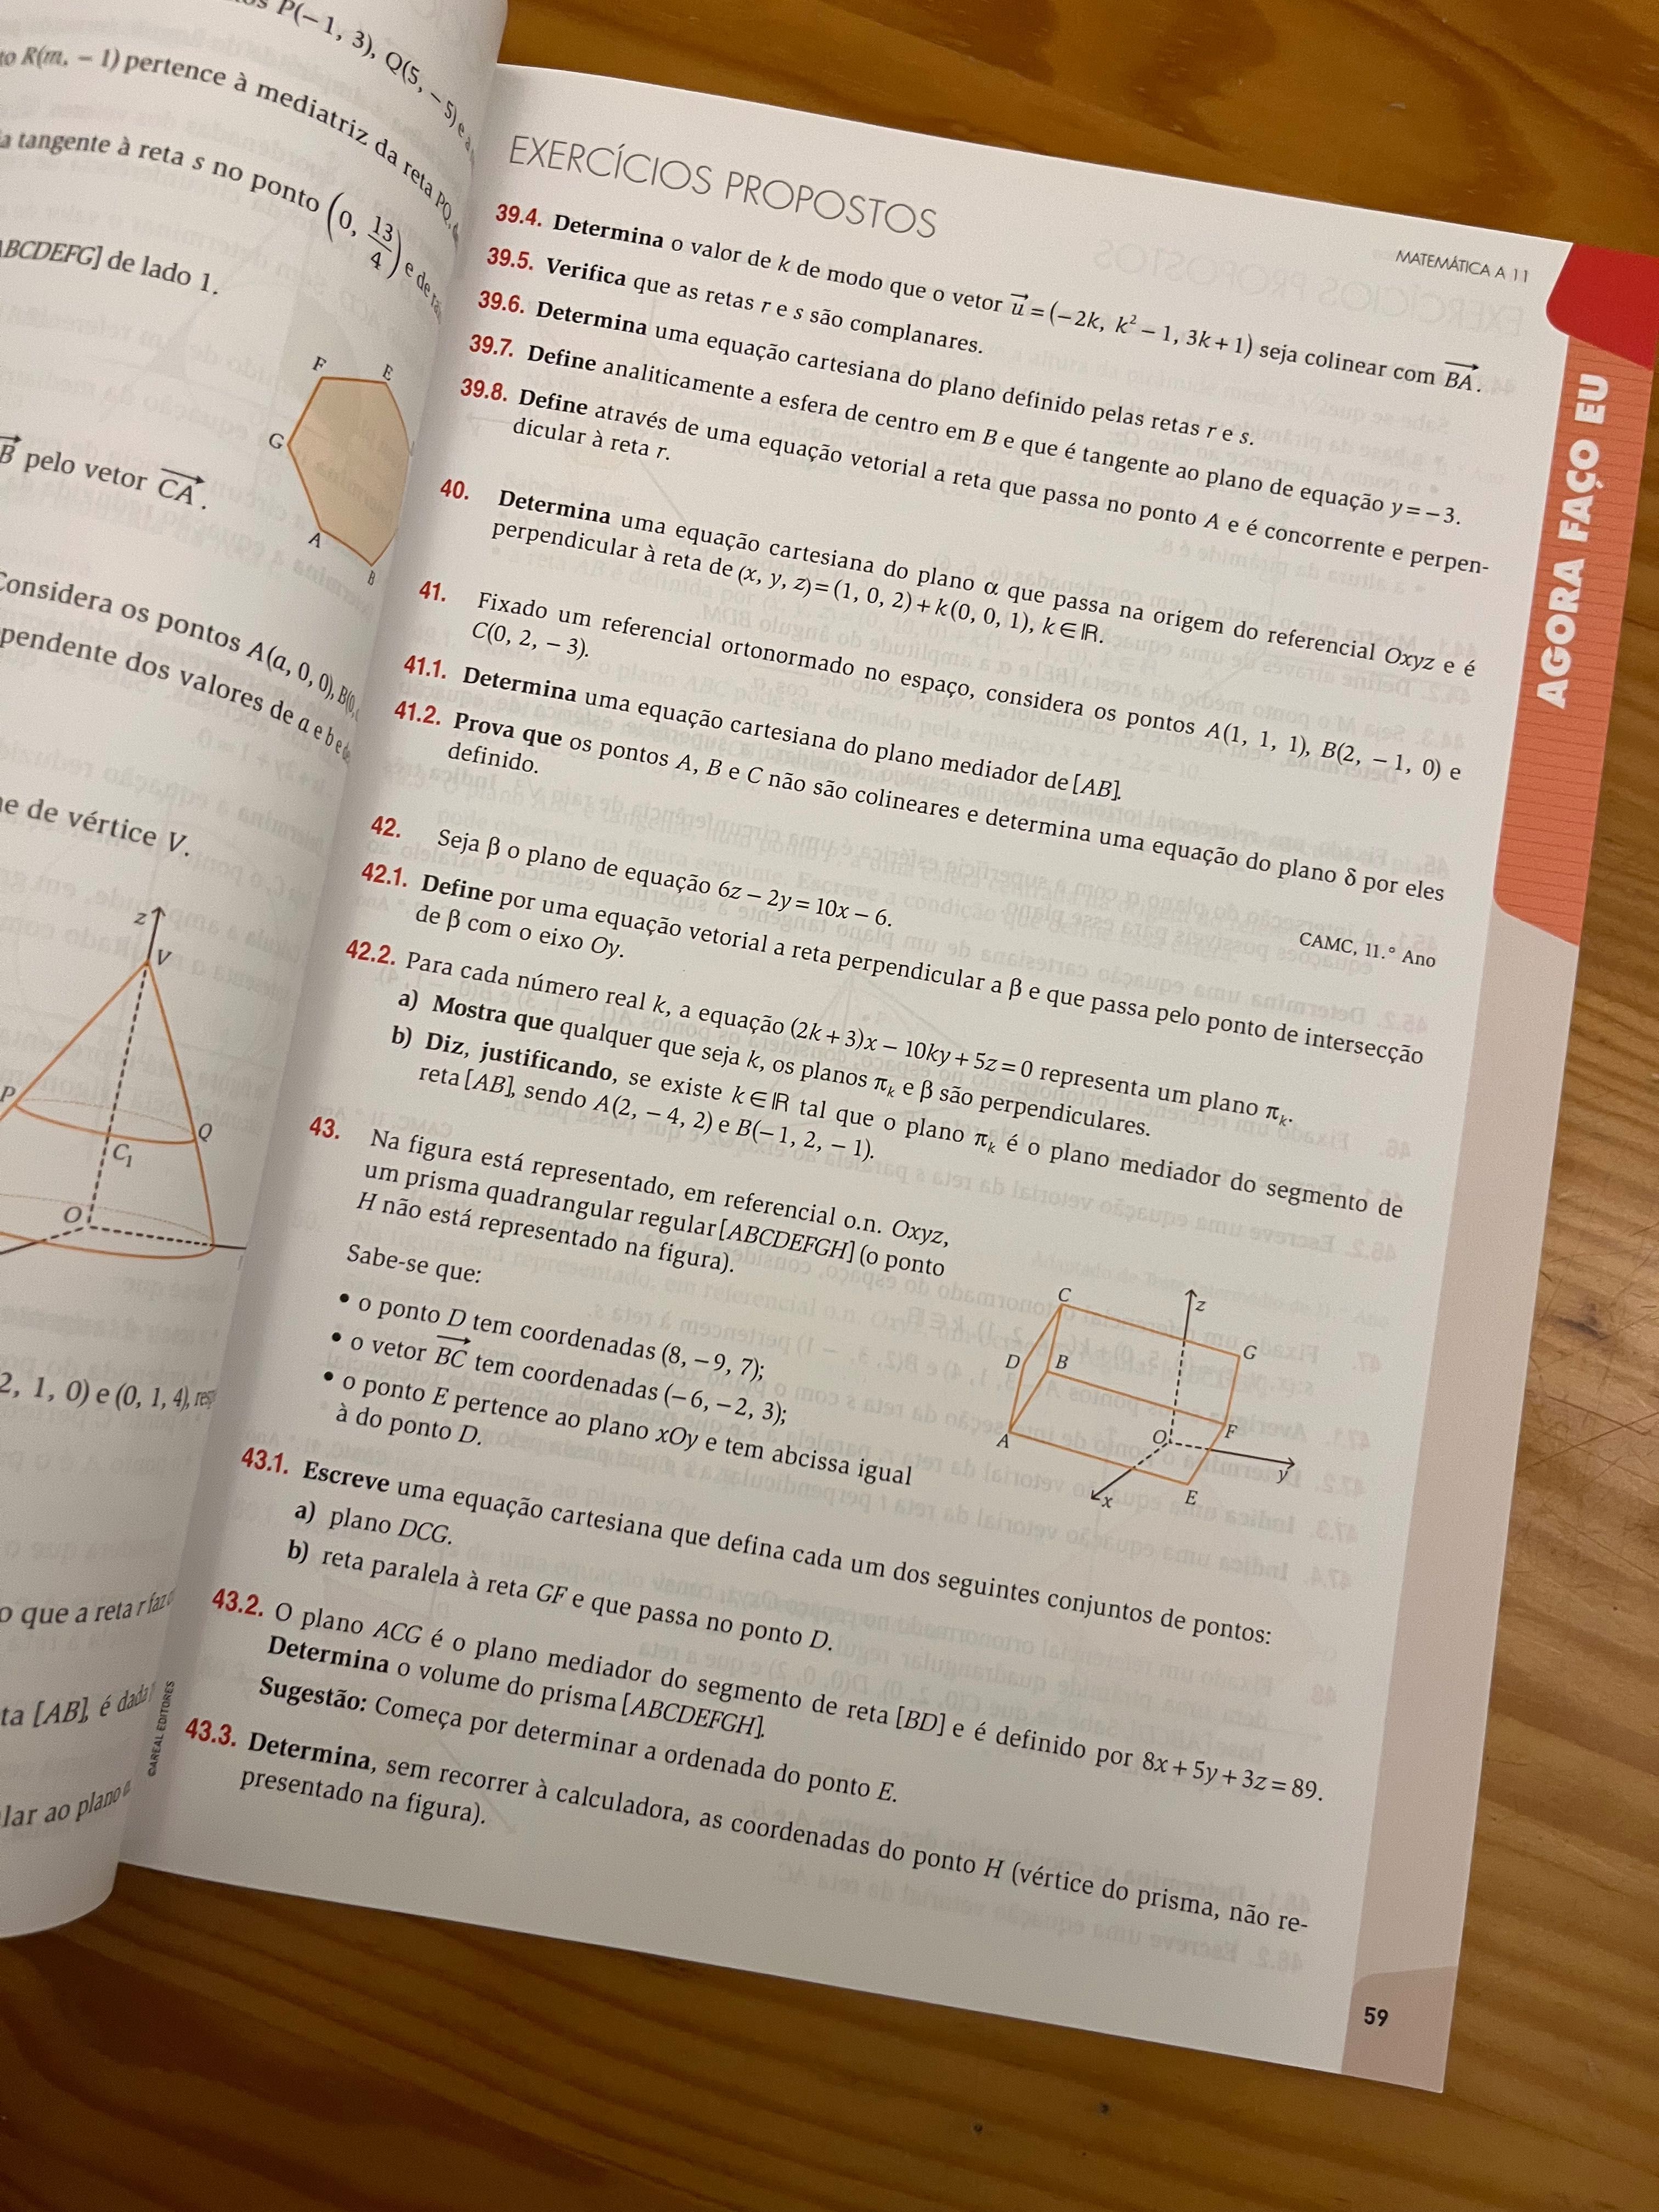 Livro “Preparar os testes” de Matemática de 11 ano